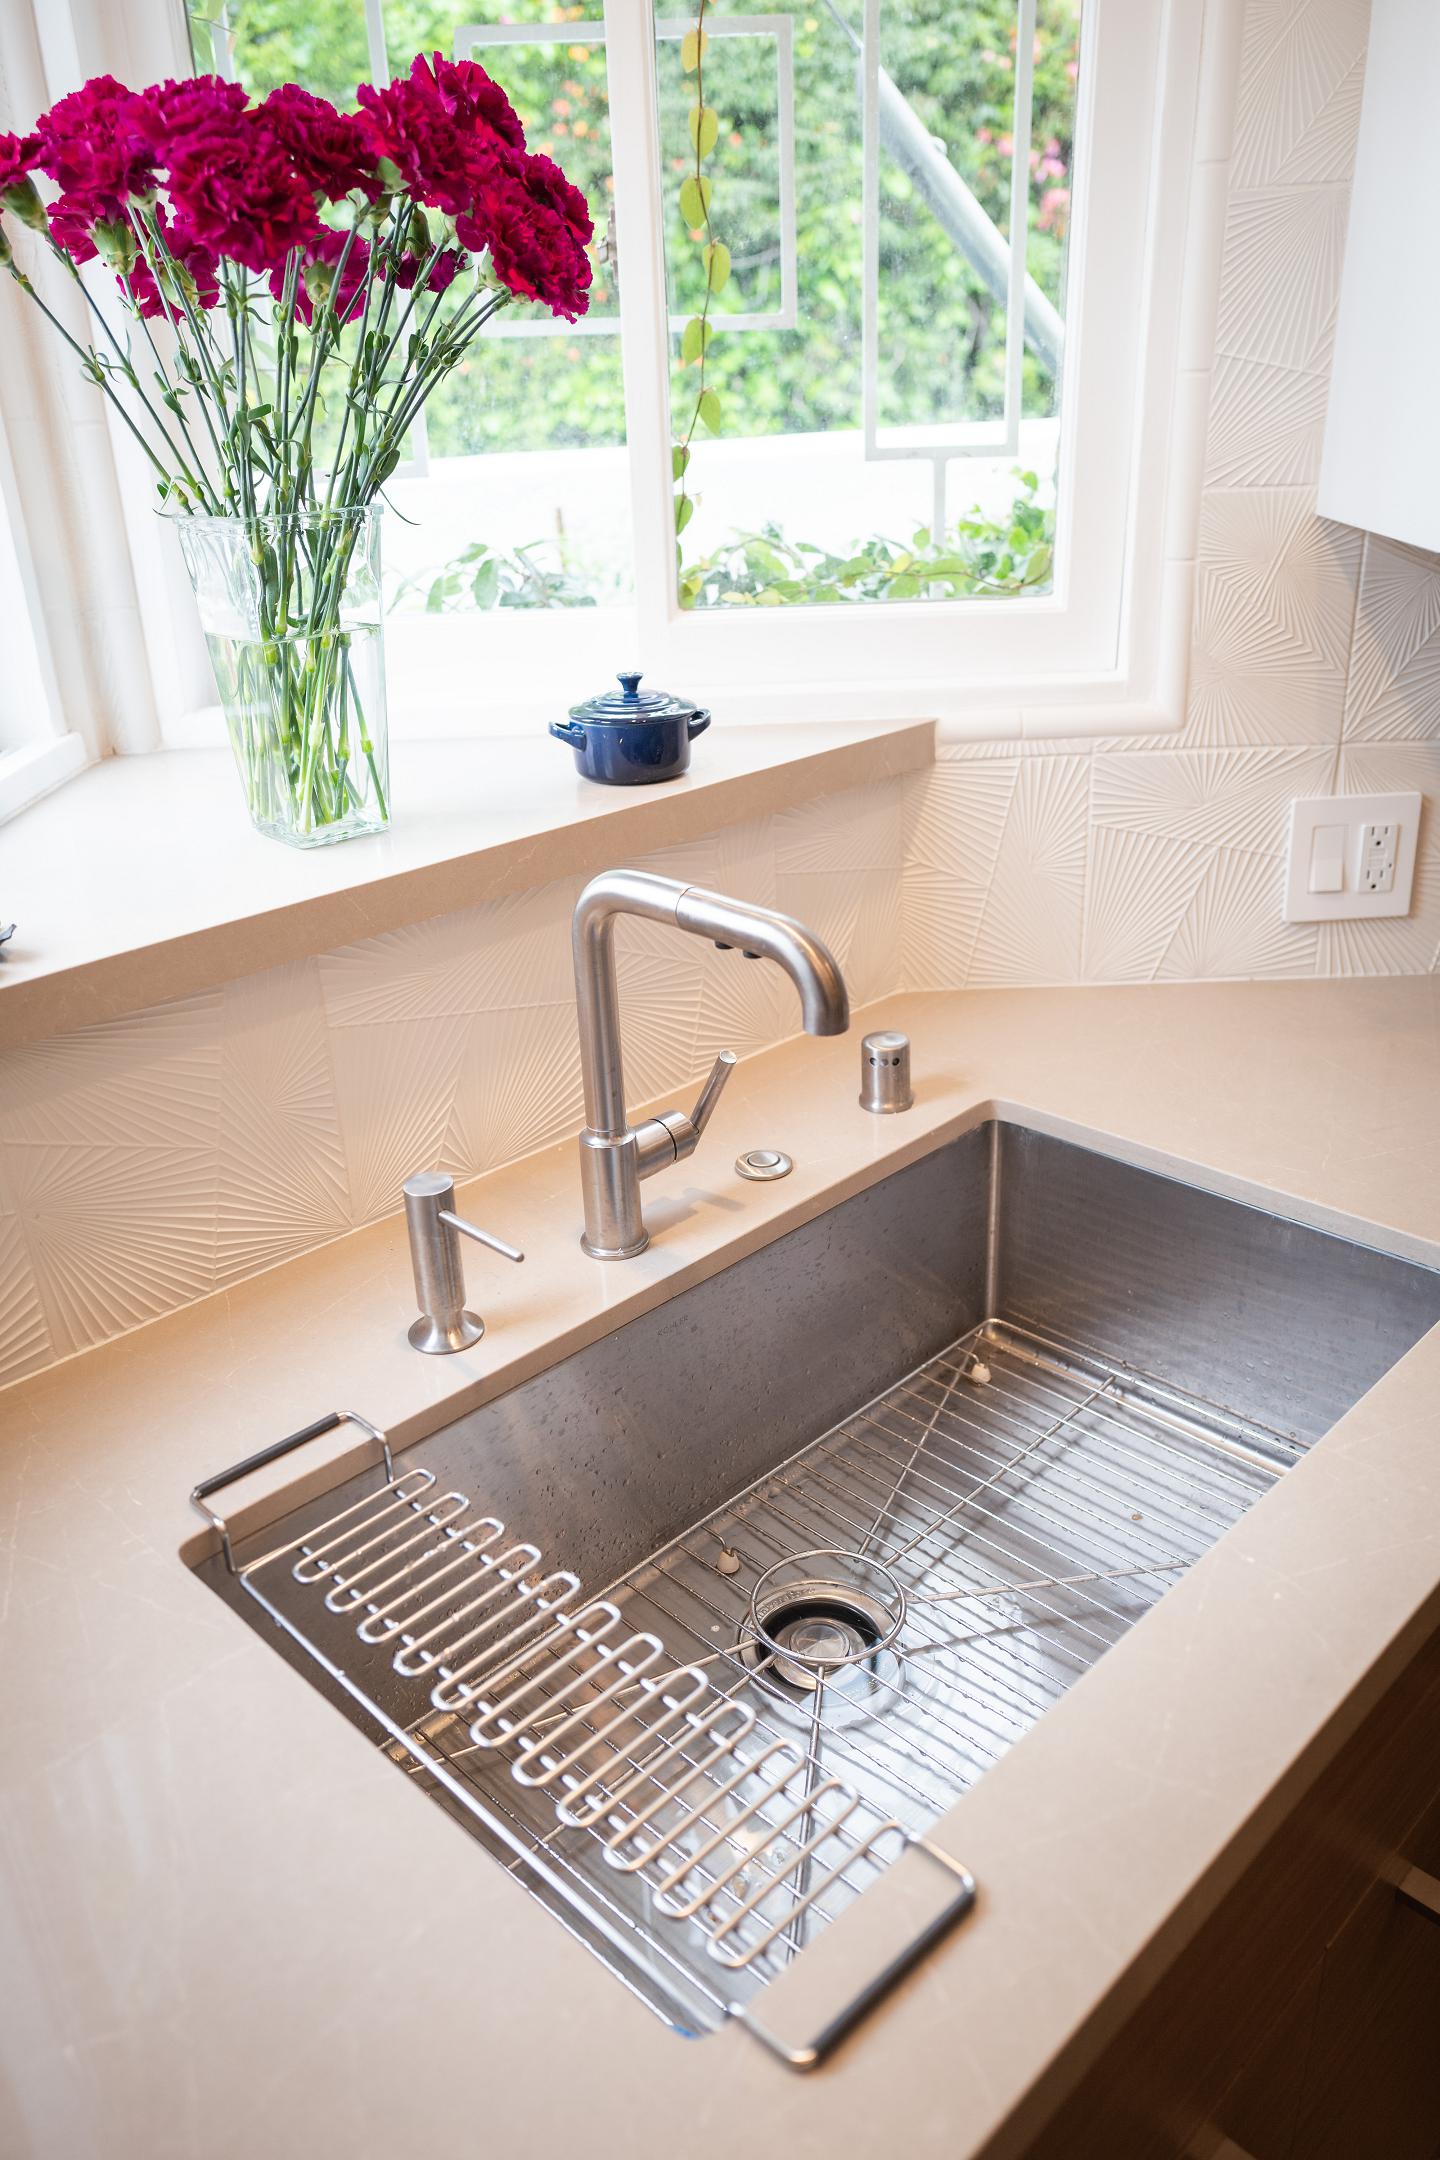 Modern kitchen sink with geometric backsplash and flowers.